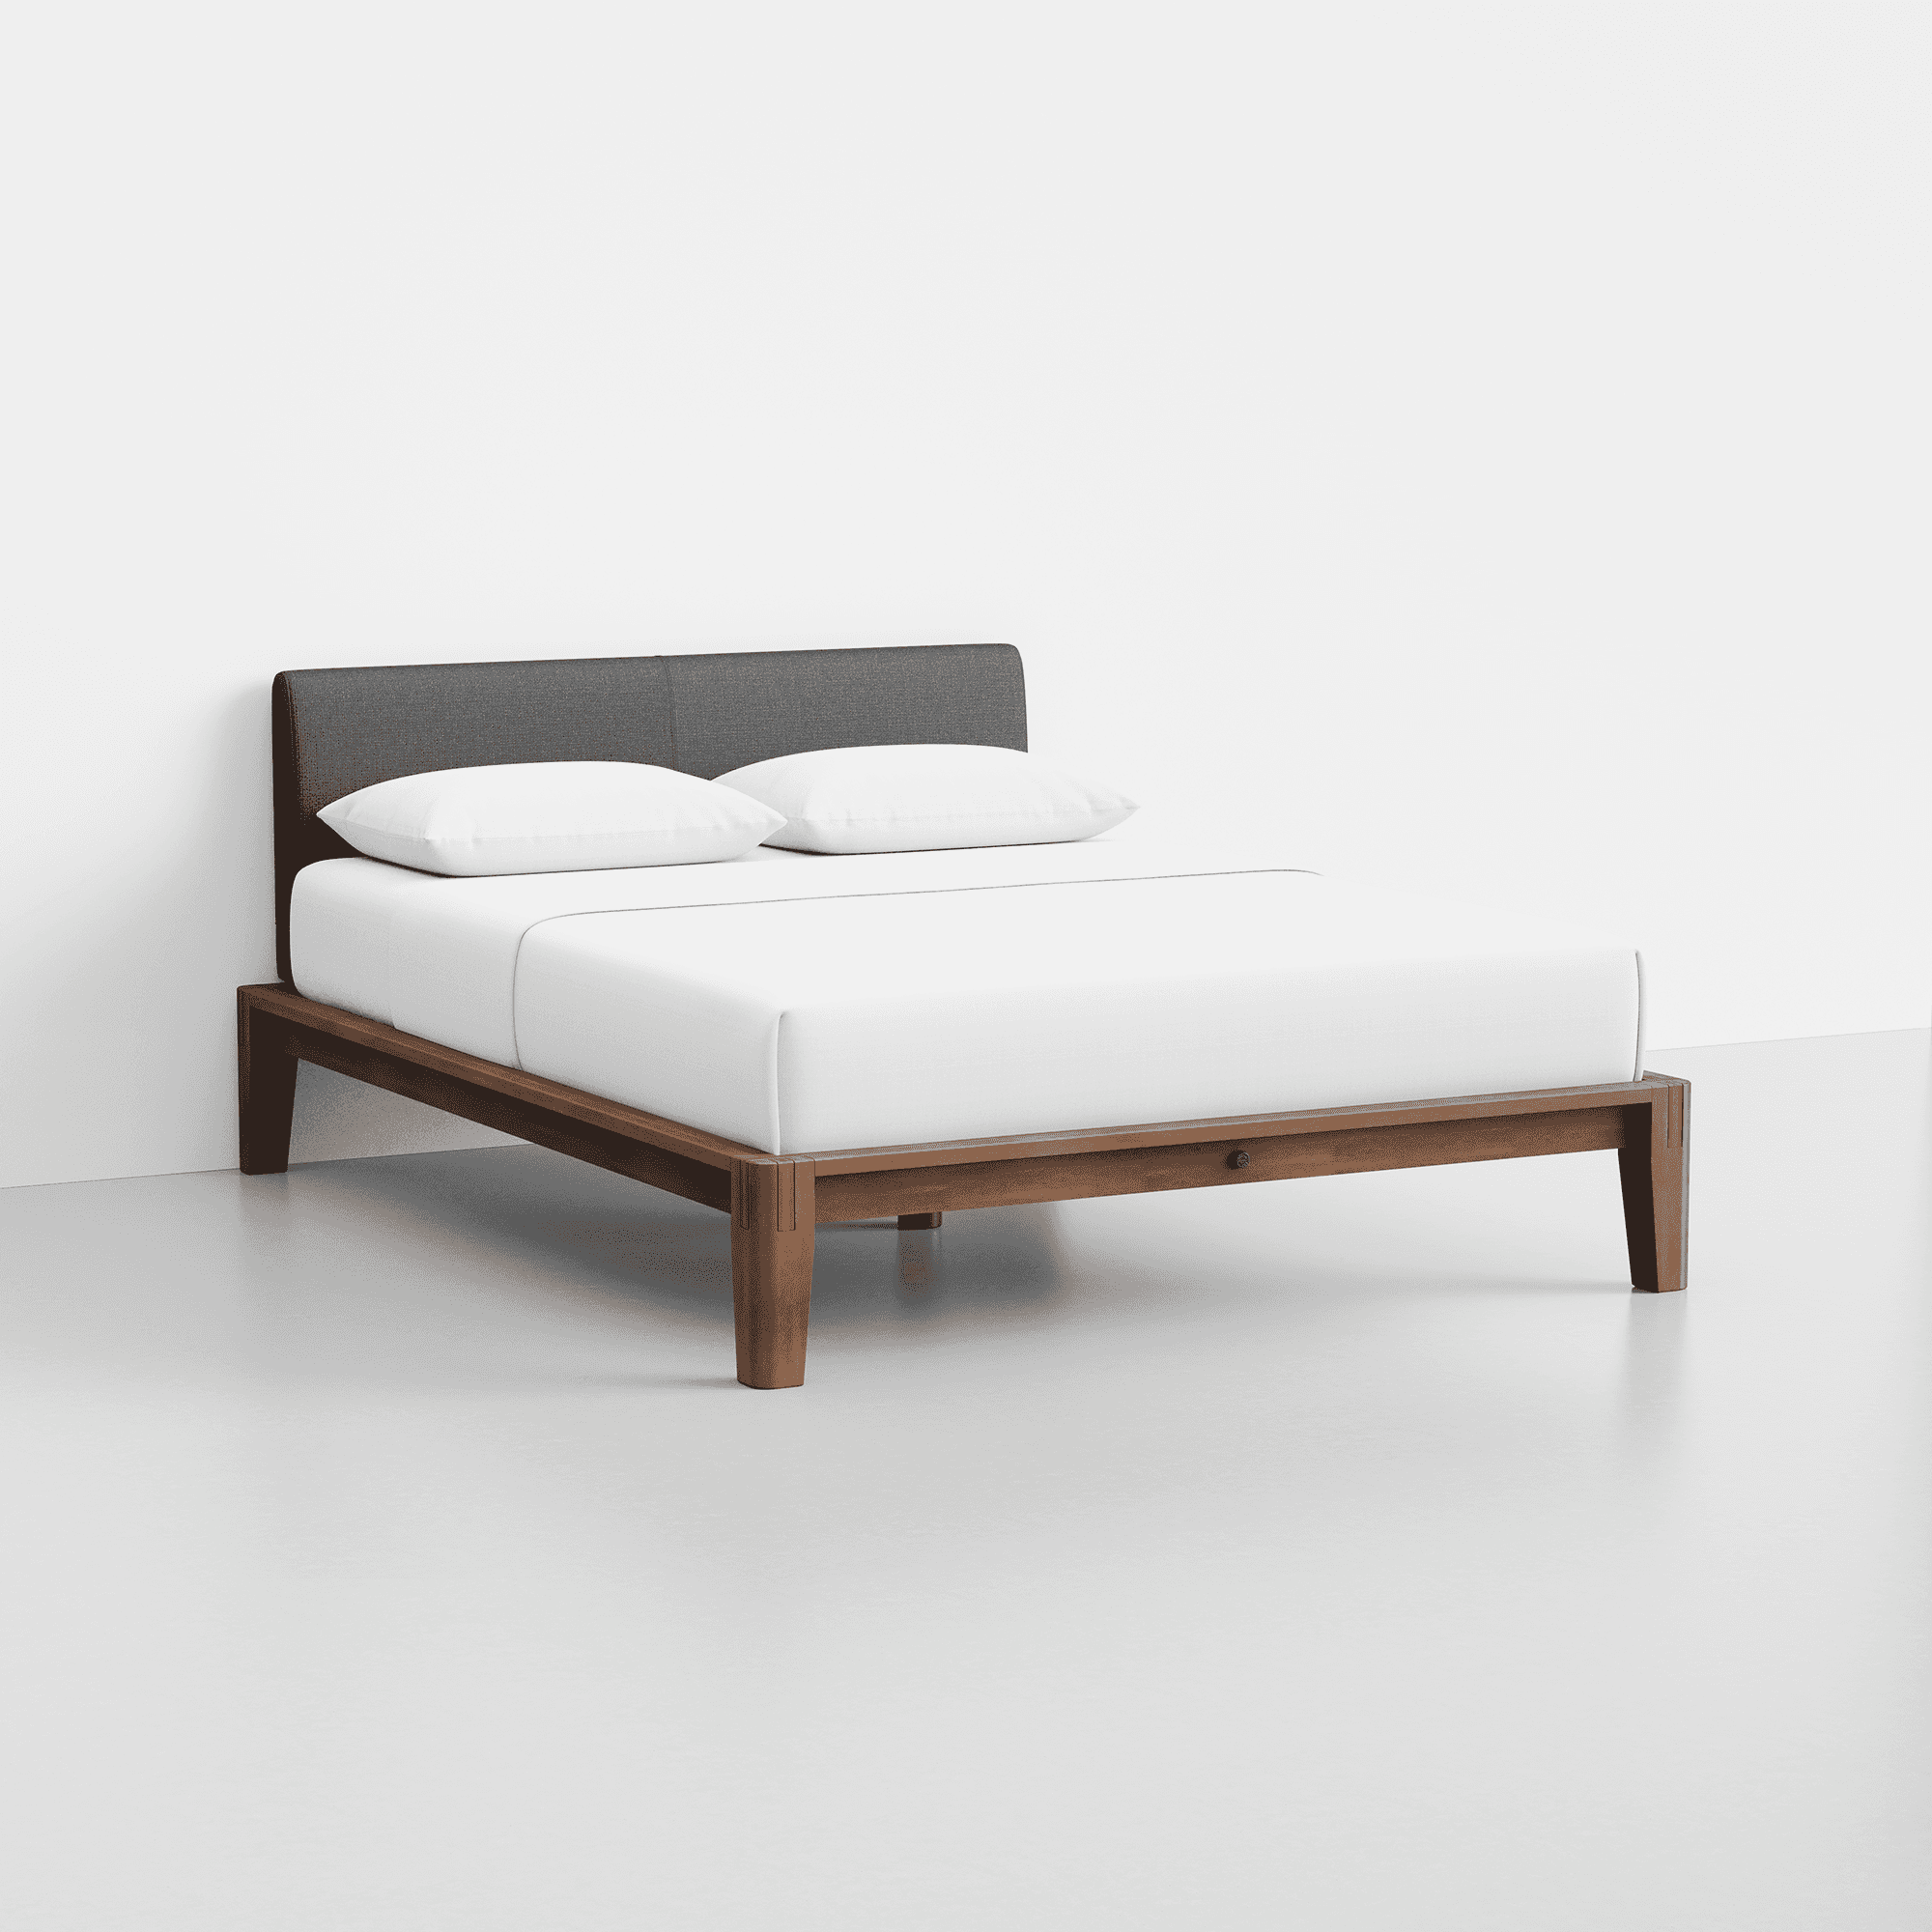 Thuma: the bed